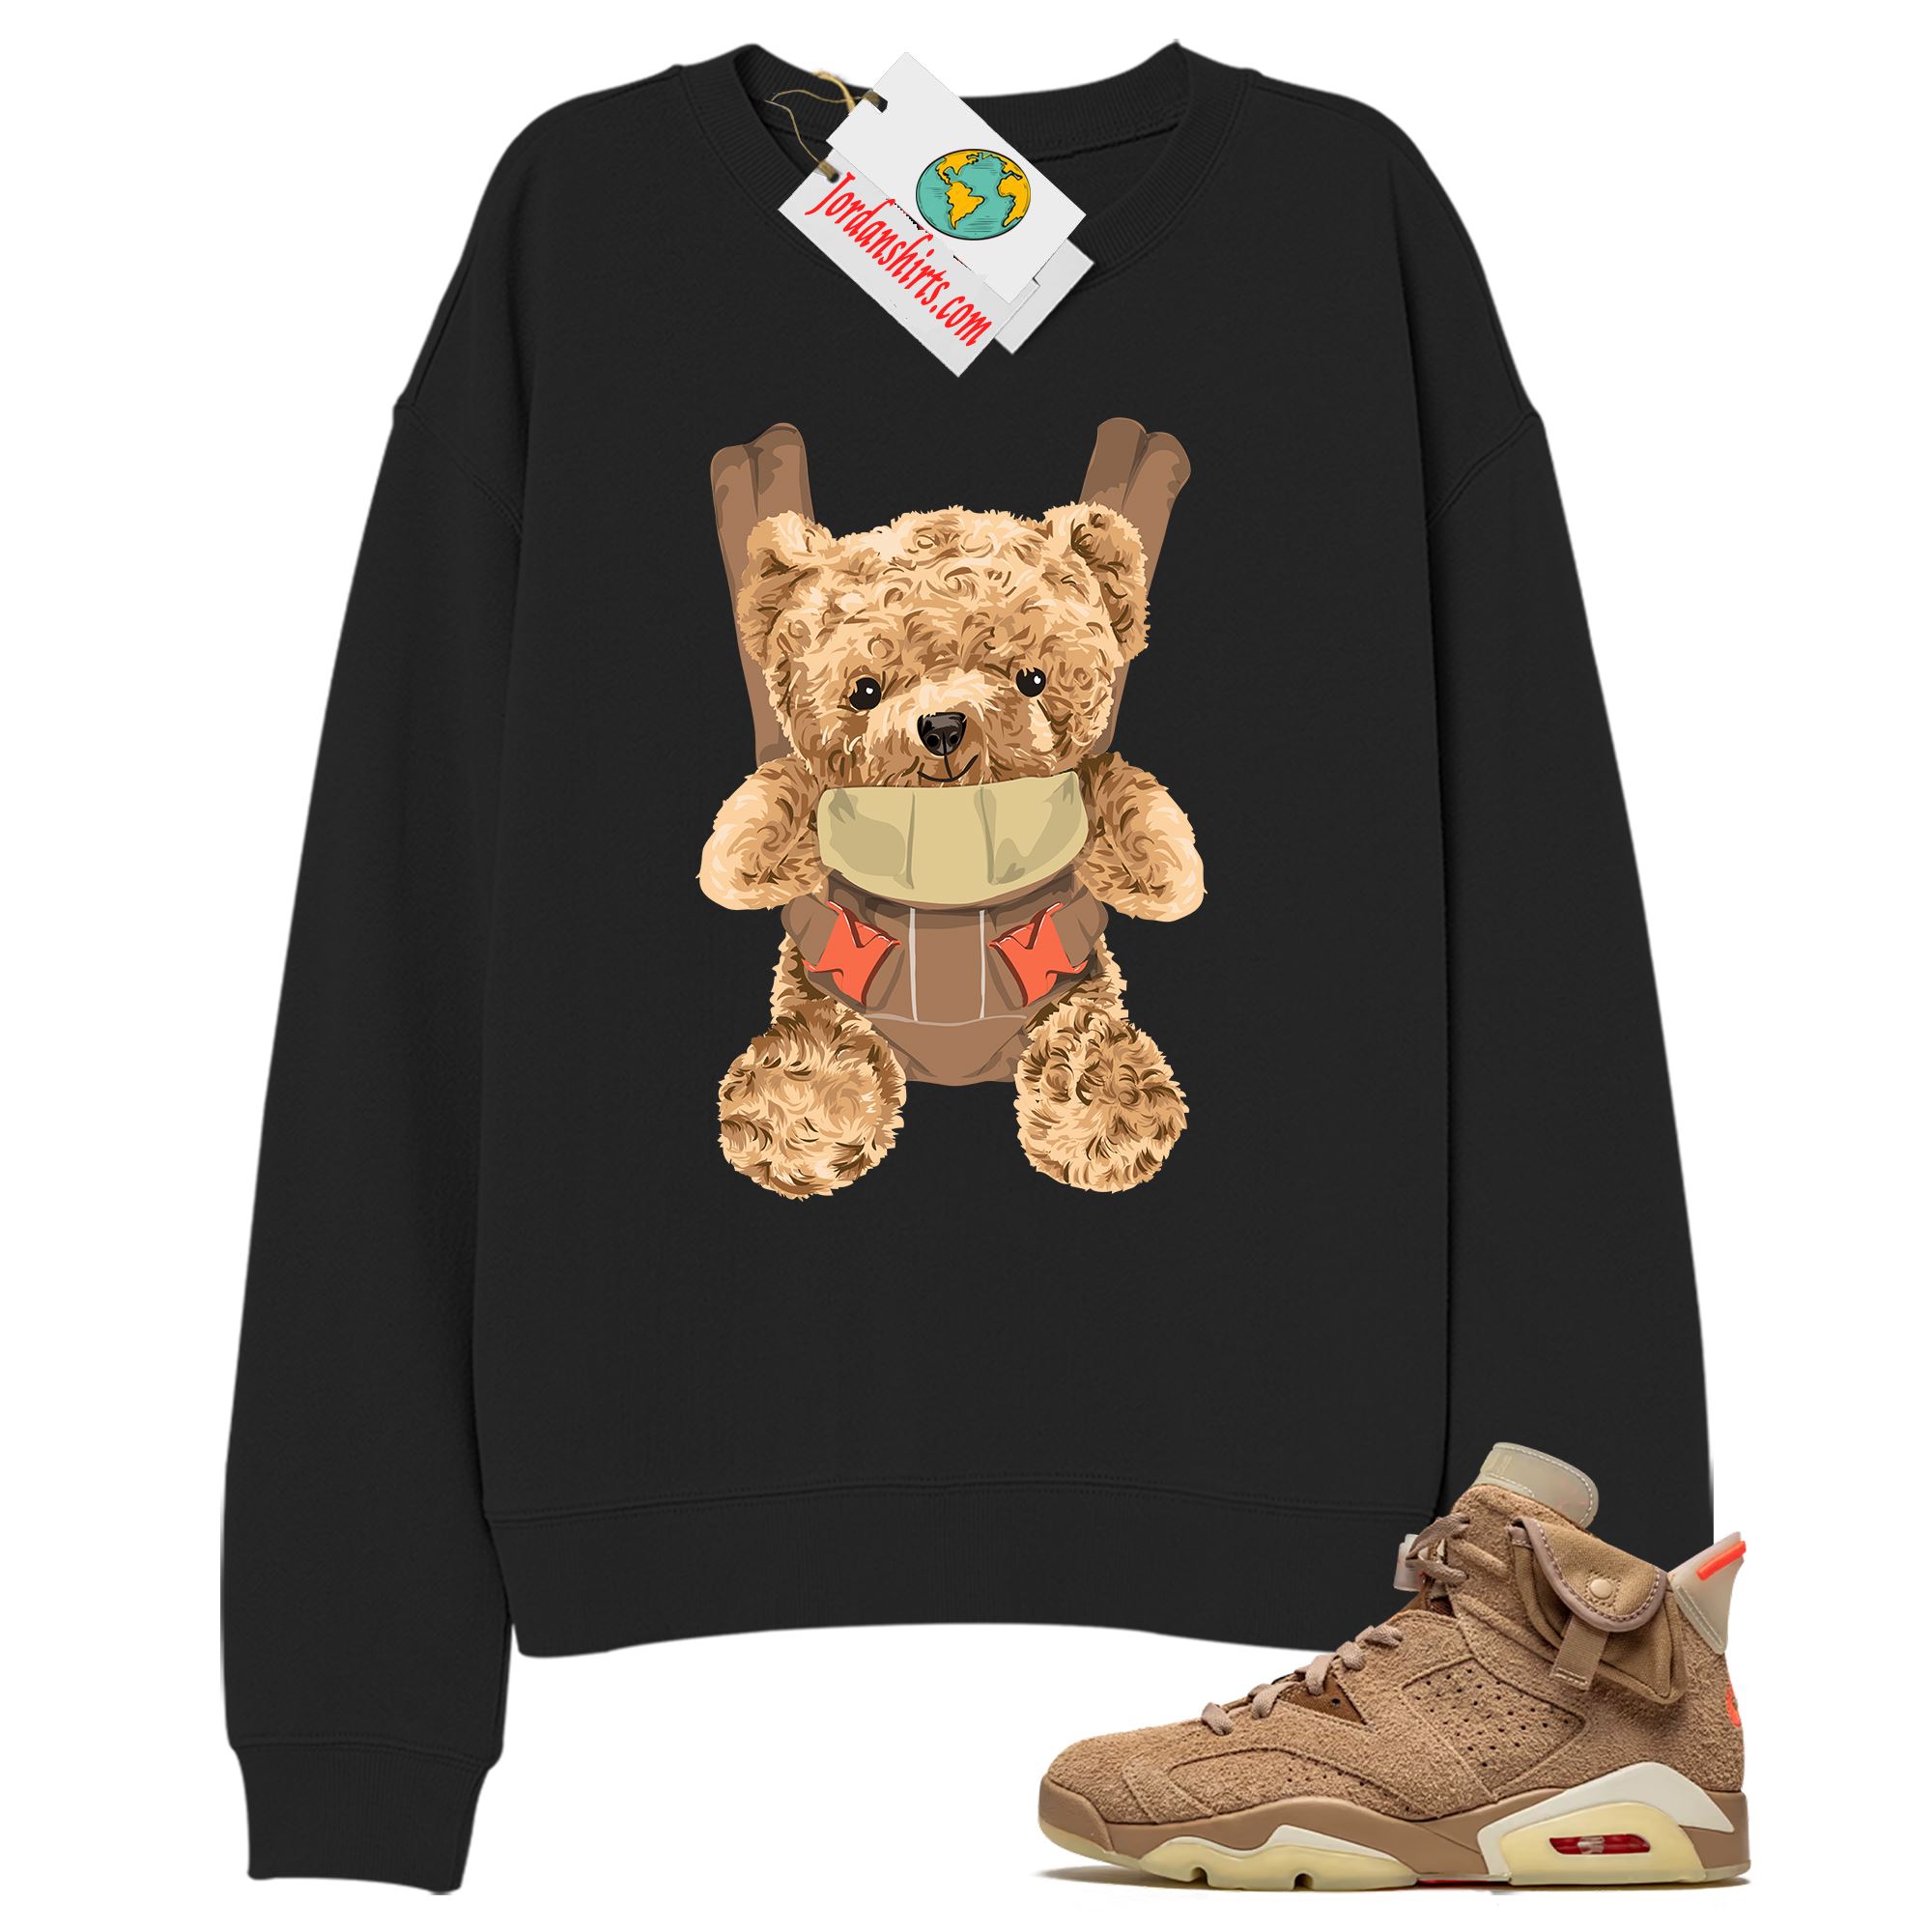 Jordan 6 Sweatshirt, Teddy Bear Bag Black Sweatshirt Air Jordan 6 Travis Scott 6s Plus Size Up To 5xl